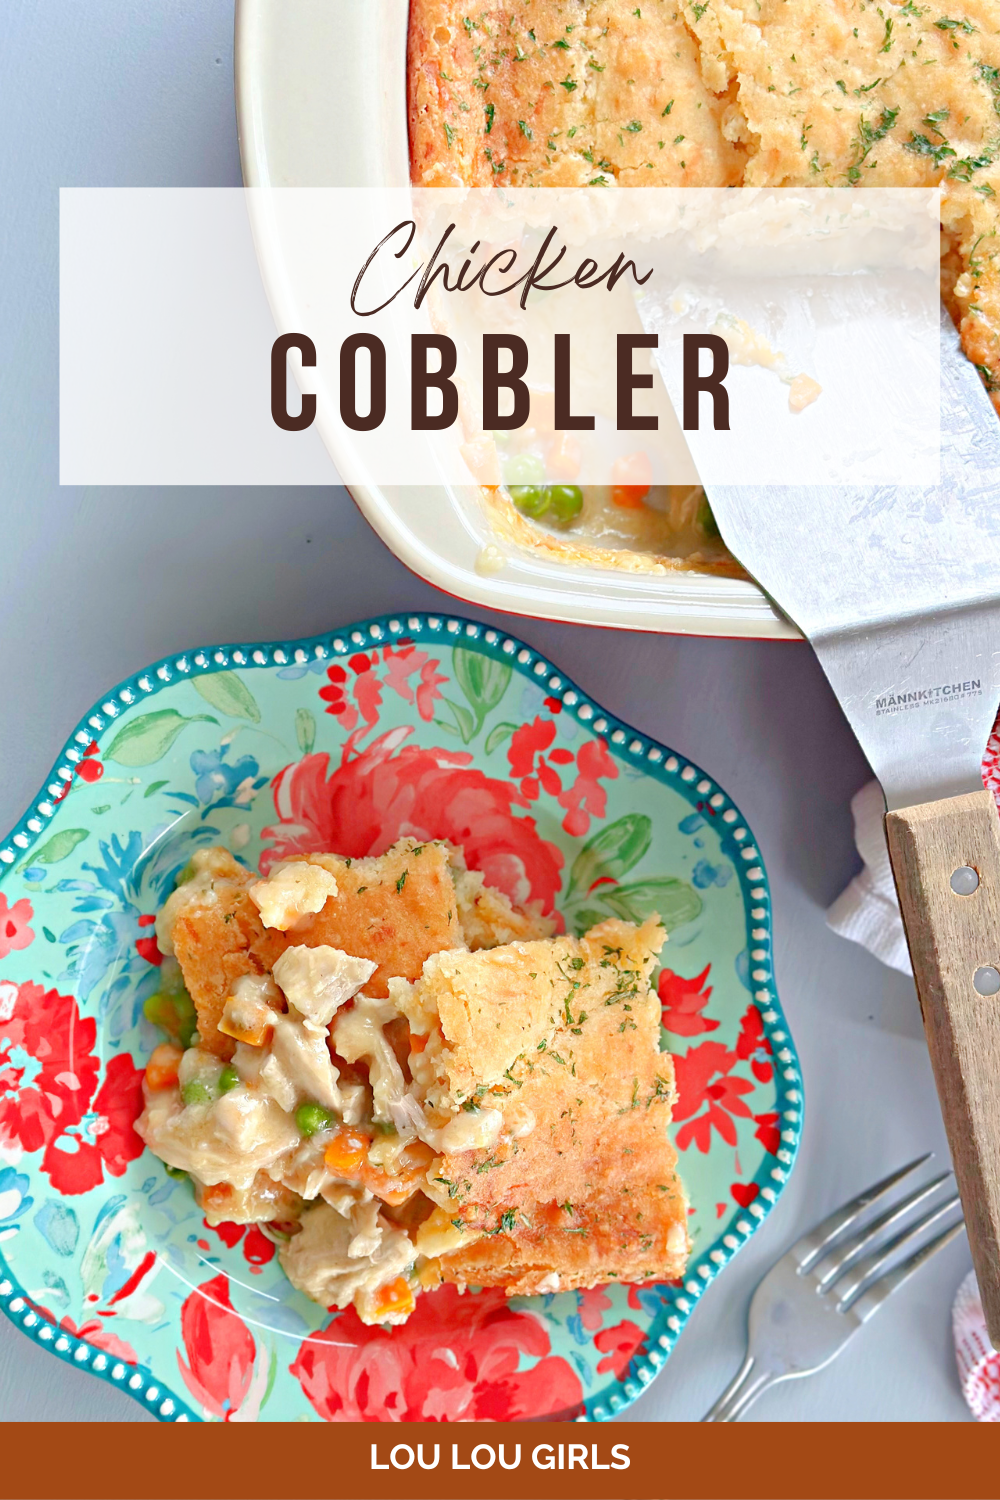 Chicken Cobbler #chicken #chickencobbler #casserole #easydinnerrecipe #dinner #weeknightdinner #kidapprovedmeal